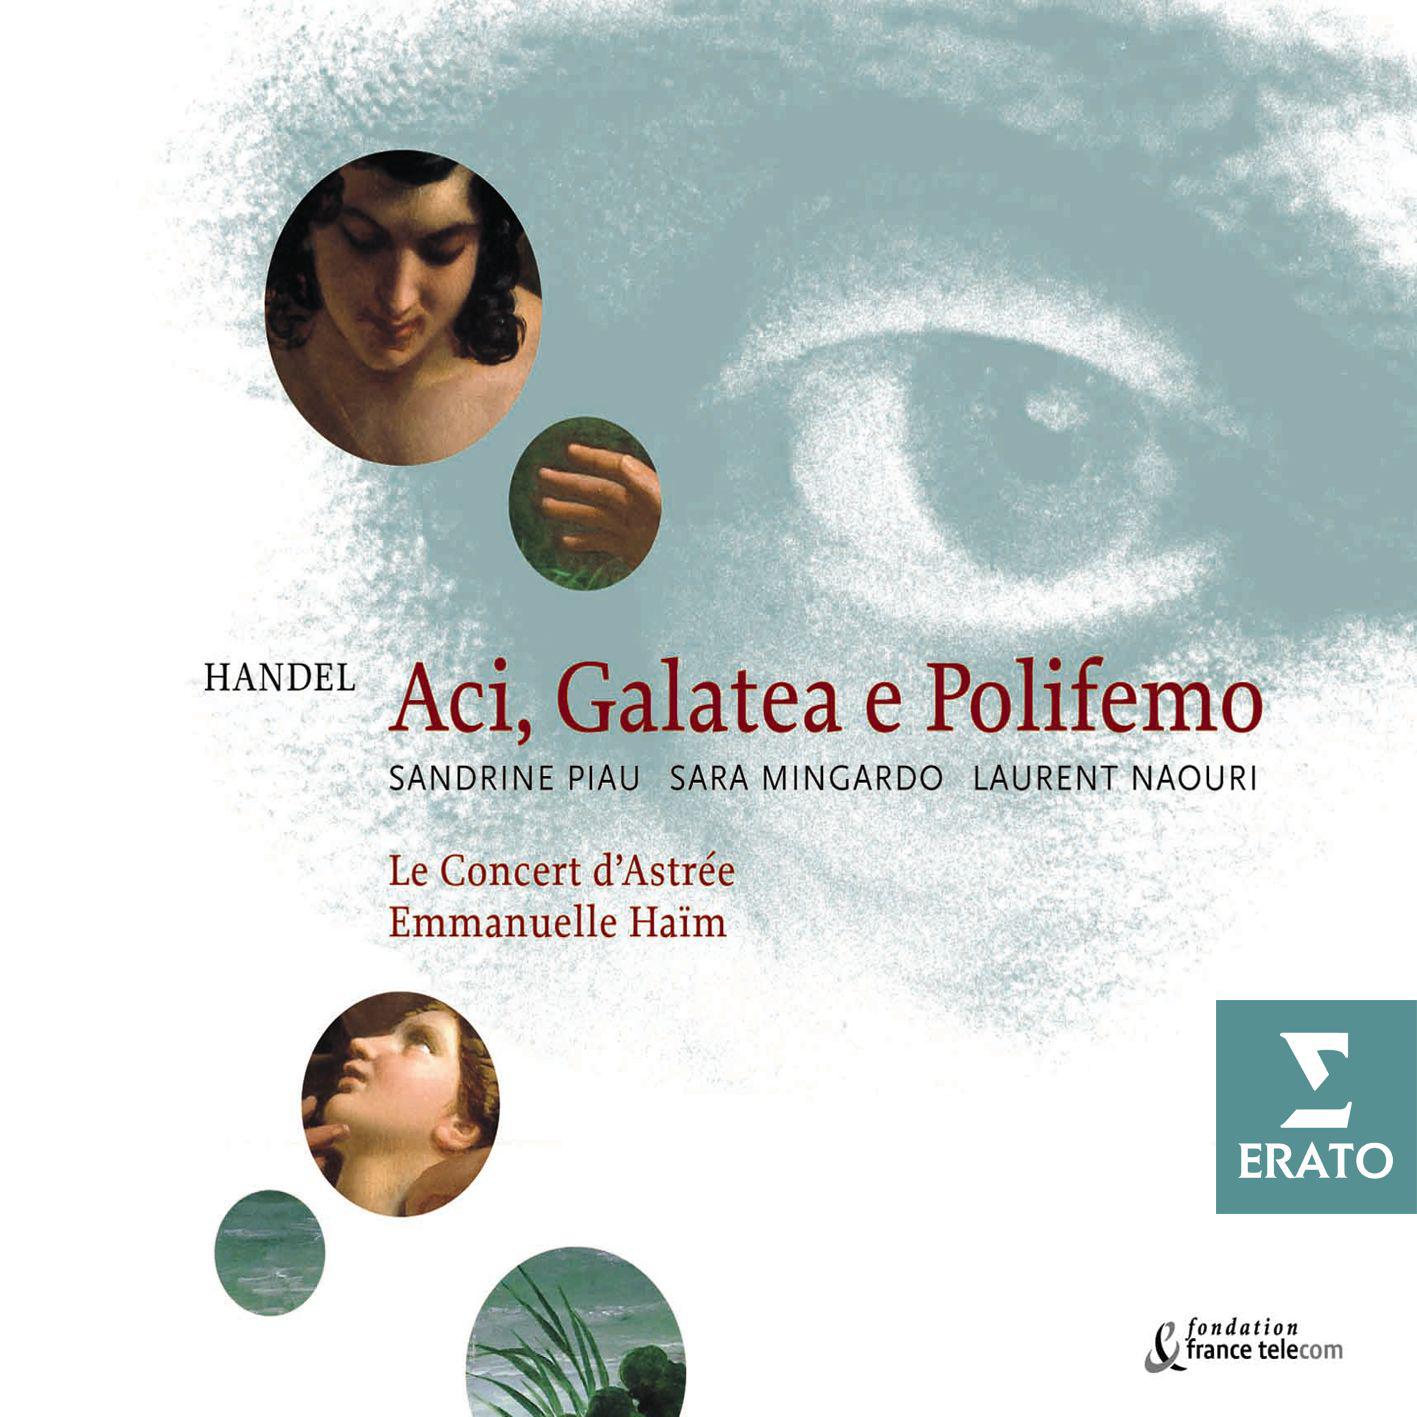 Aci, Galatea e Polifemo, Ouverture:Andante - Allegro - Andante